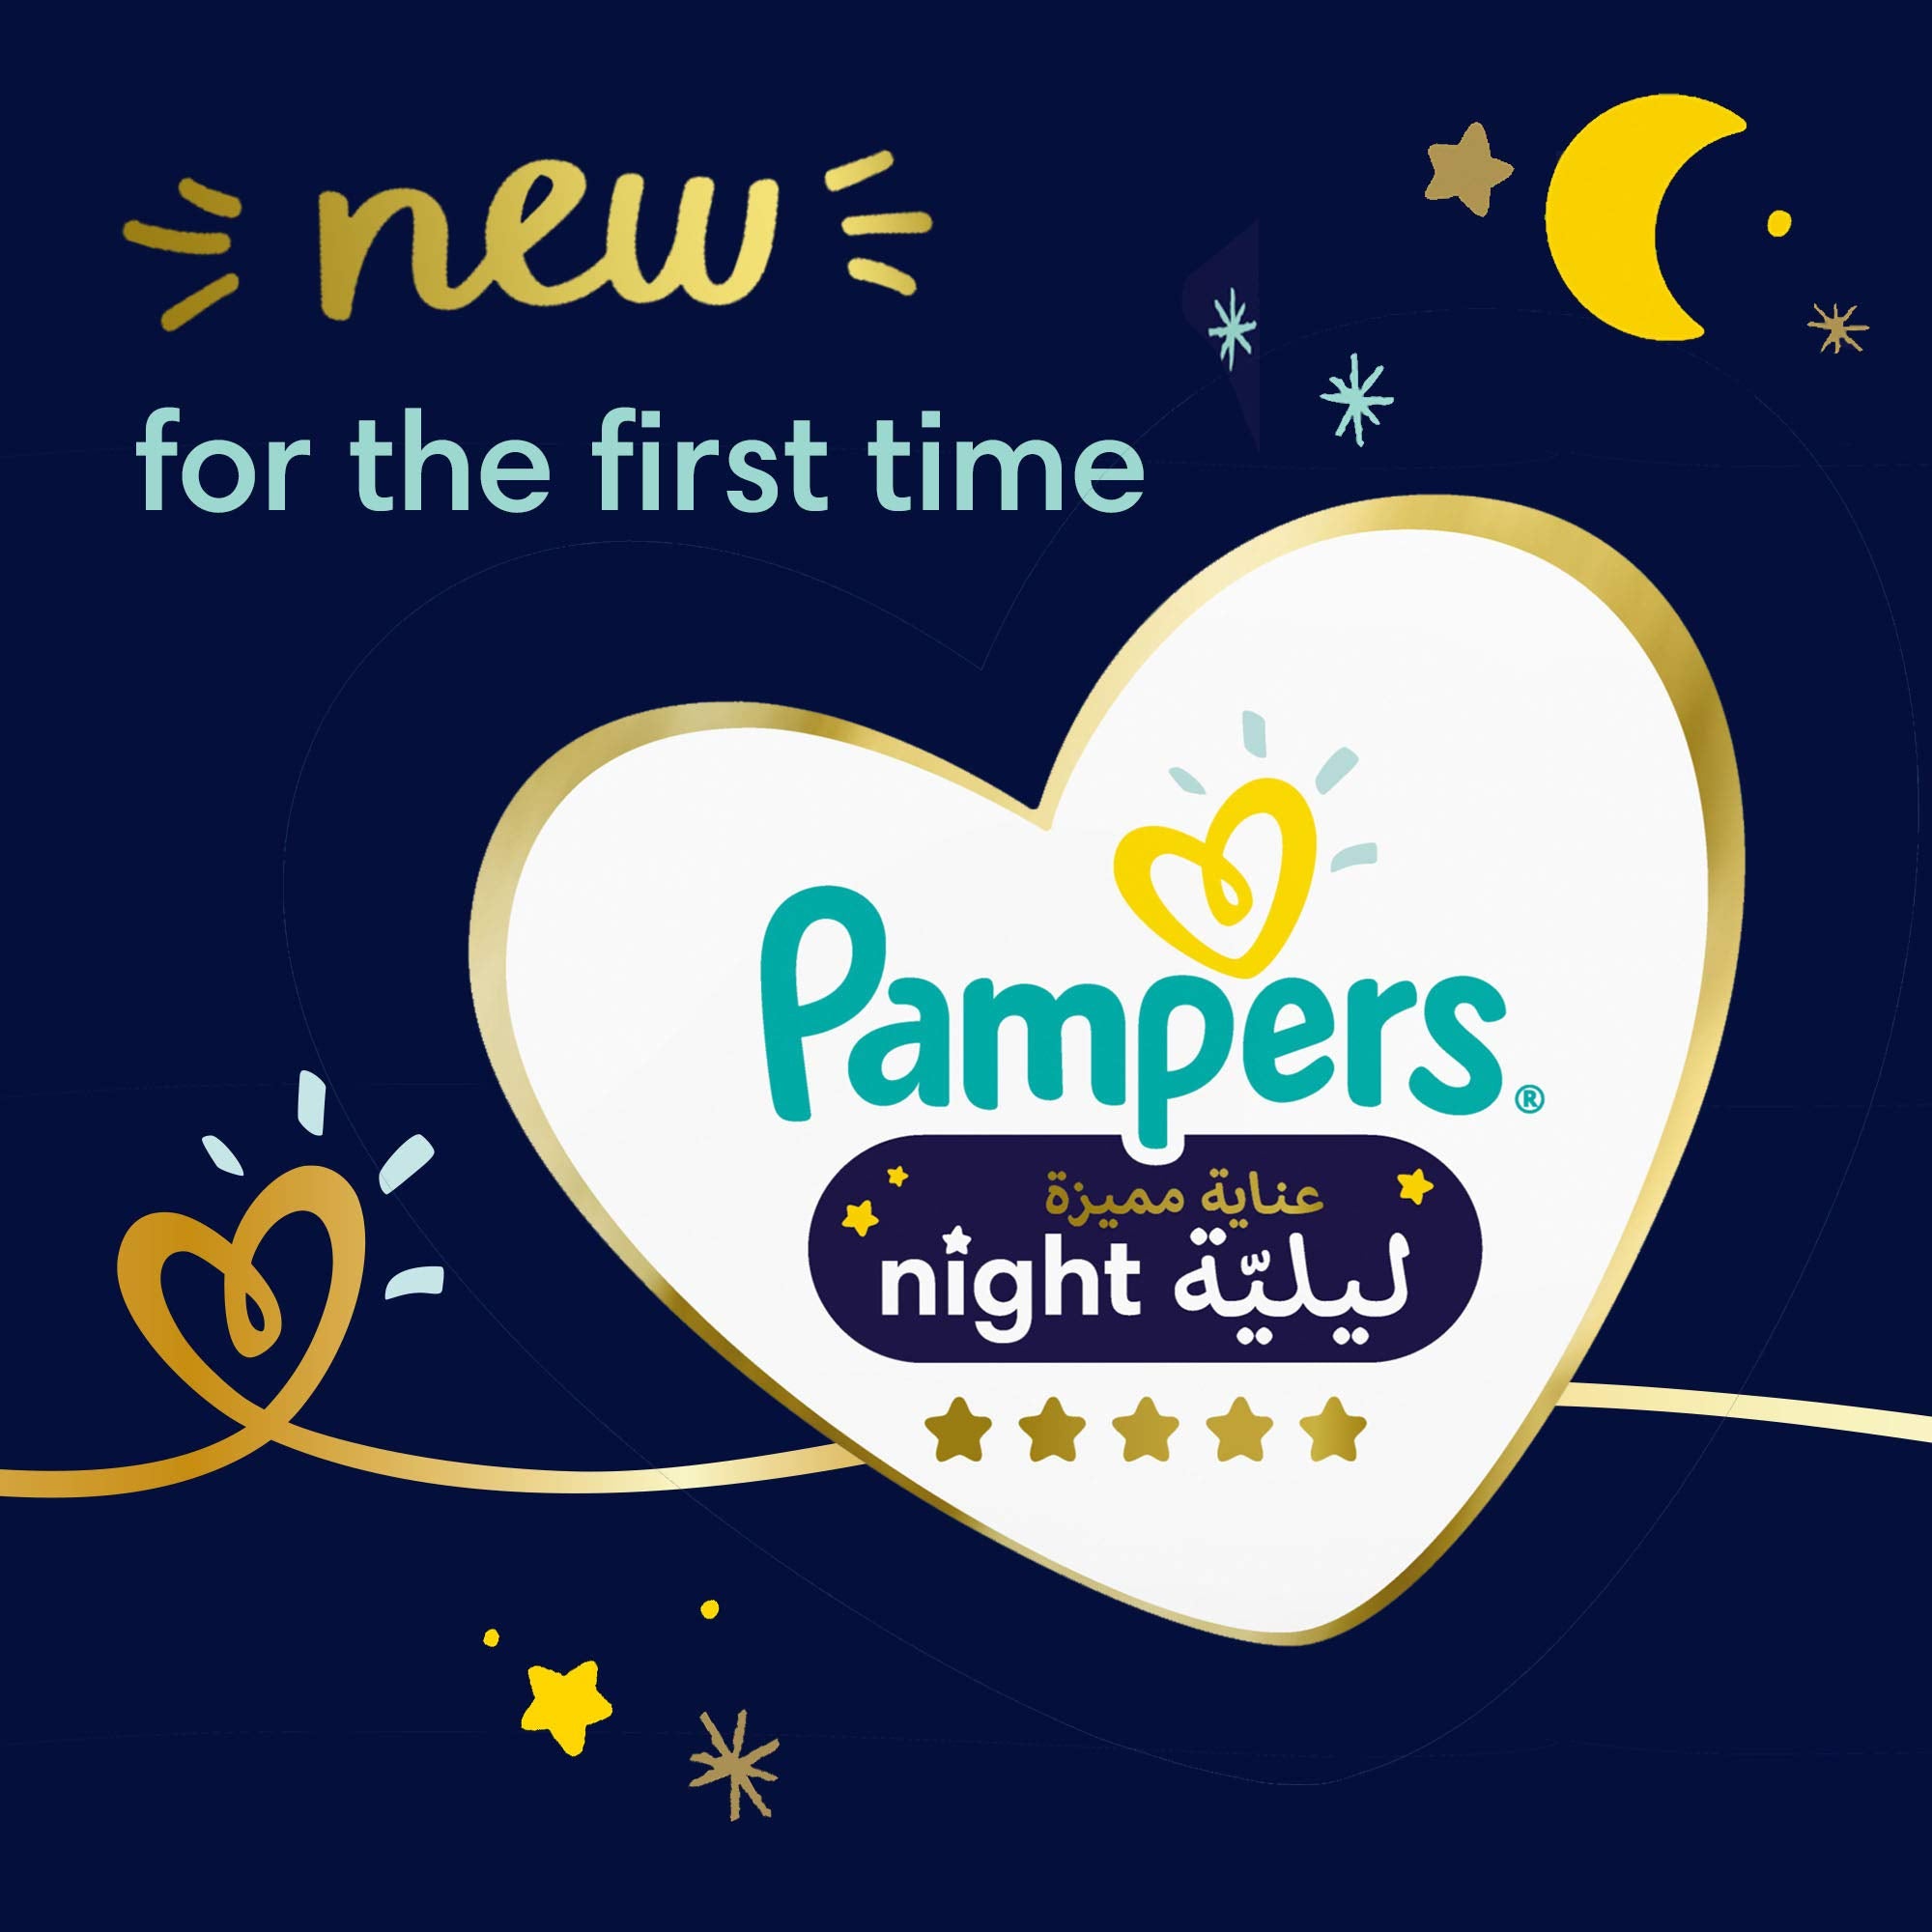 Pampers Premium Care Extra Sleep Protection Night Diapers, Size 5, 12-17Kg, 40 Diaper Count حفاضات بامبرز بريميوم كير لحماية اضافية اثناء النوم، مقاس 5، 12-17 كجم، عدد 40 حفاضة